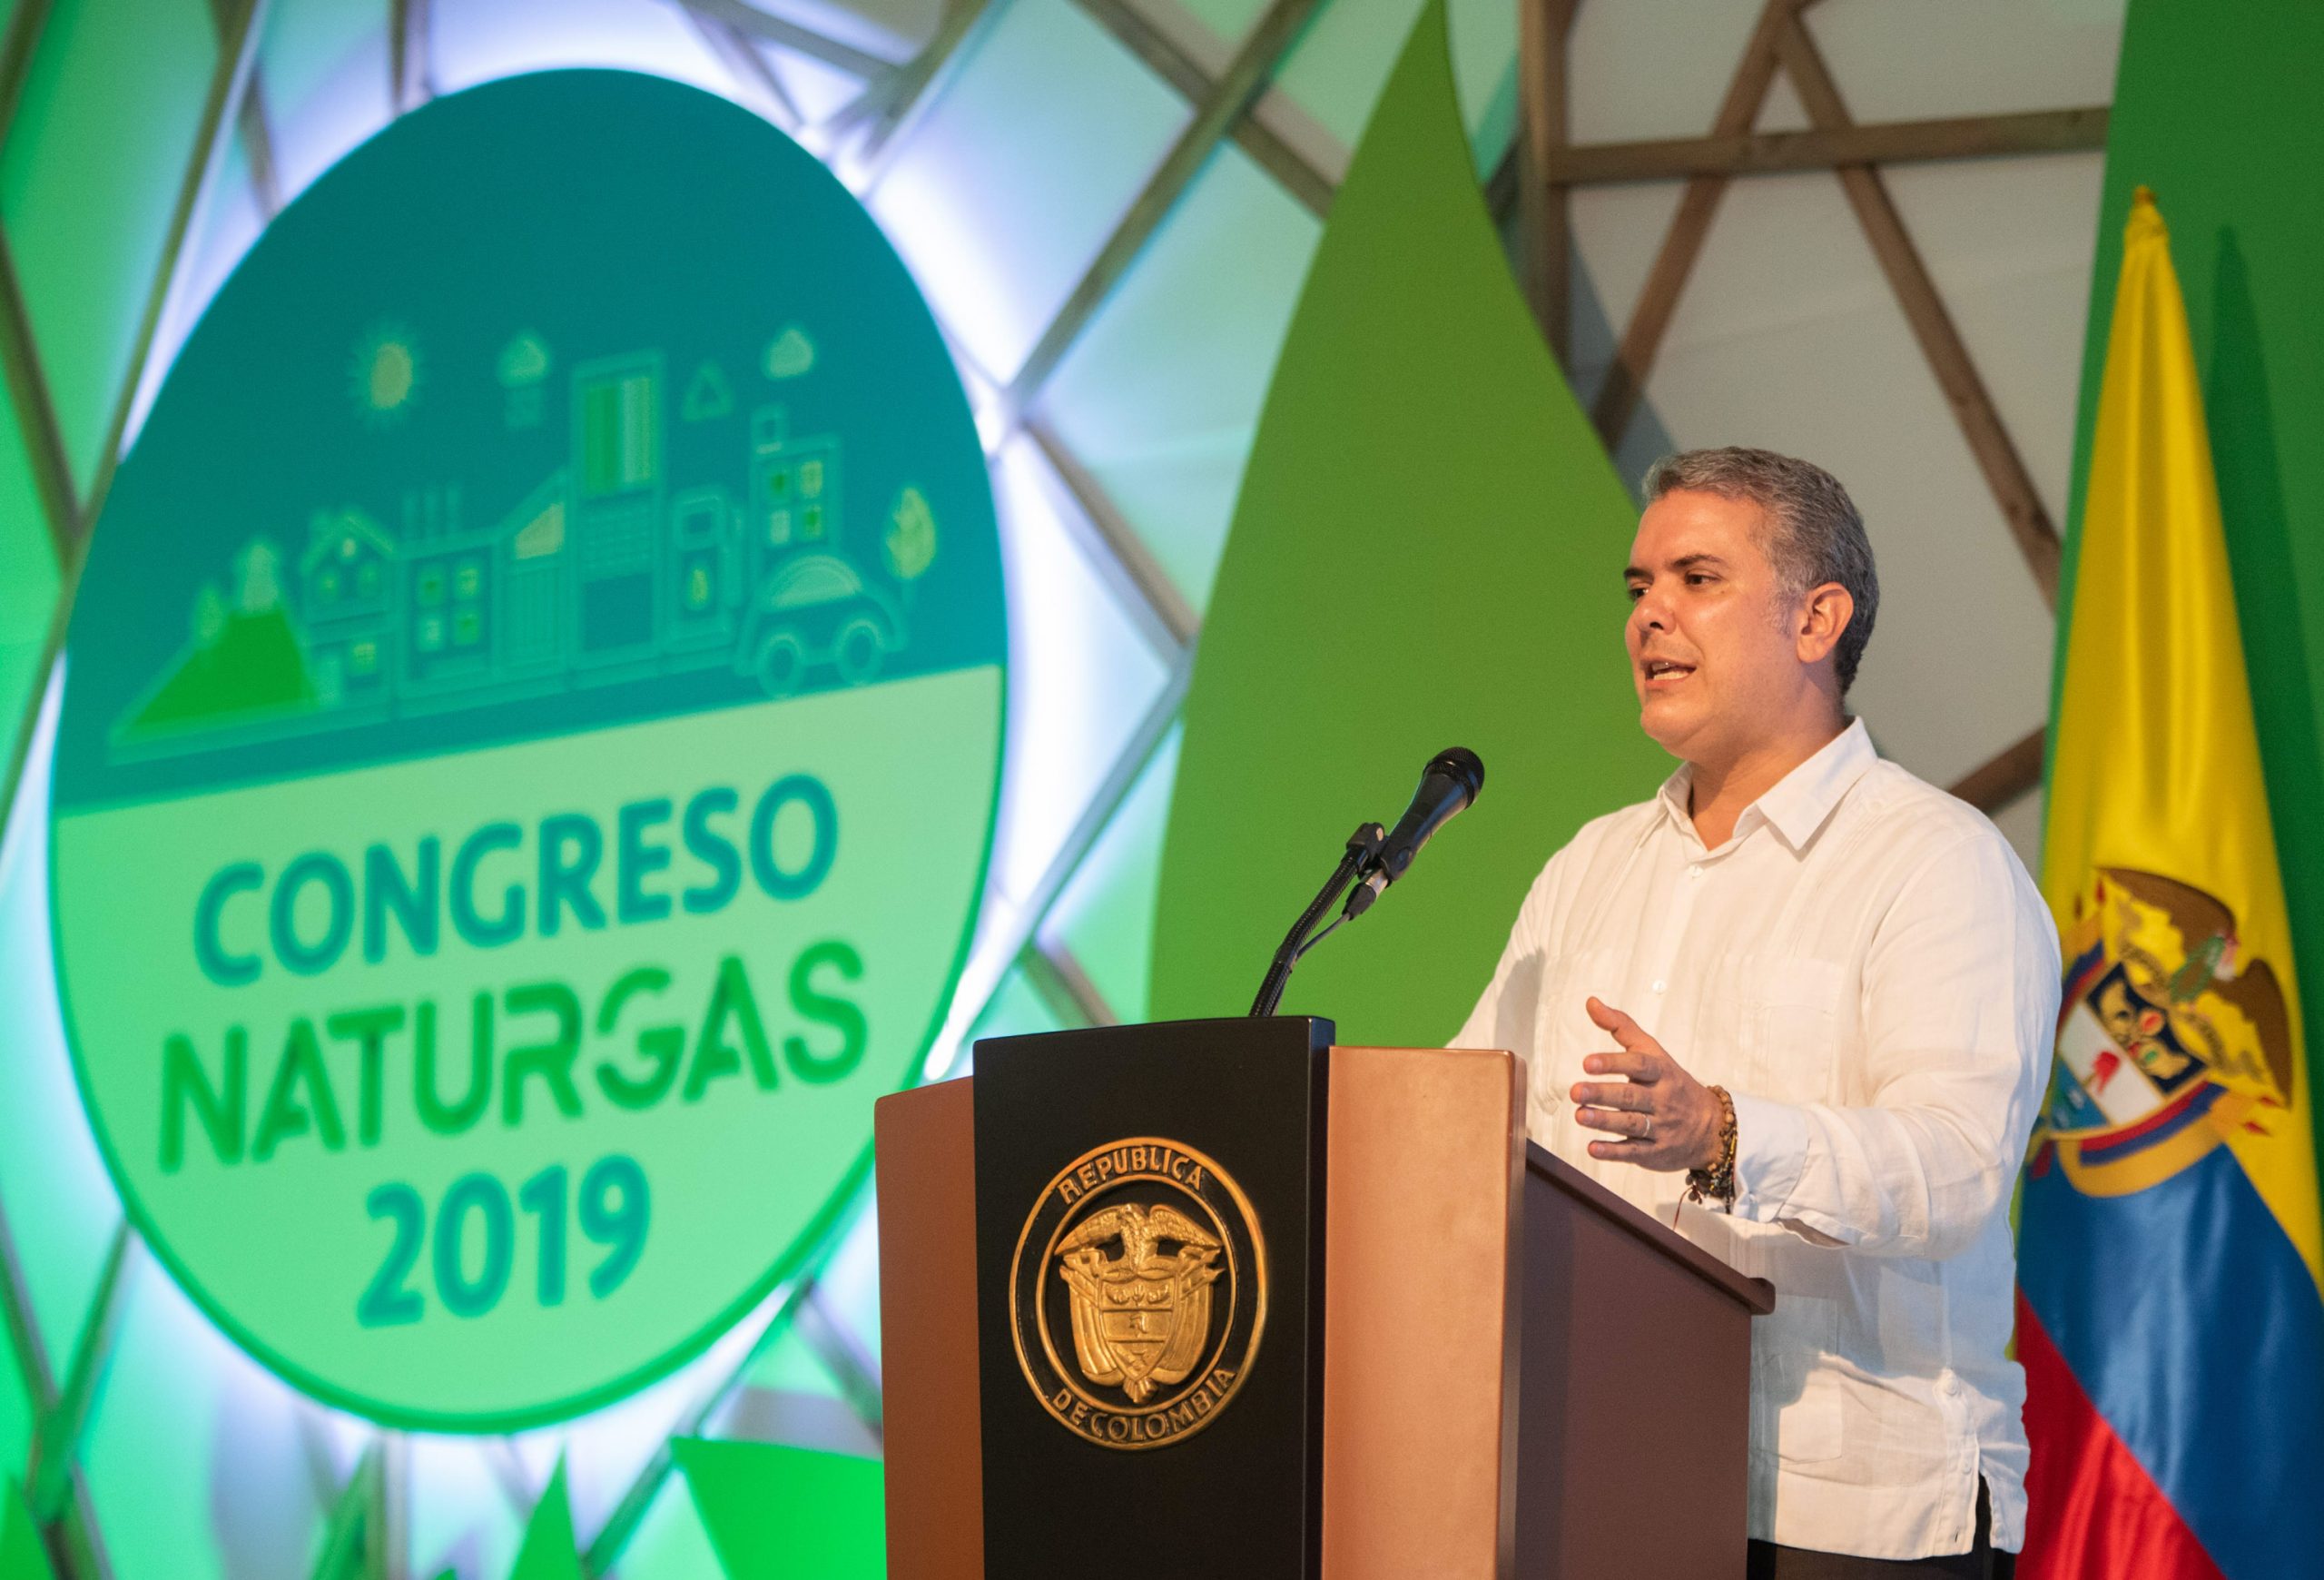 congreso naturgas 2019